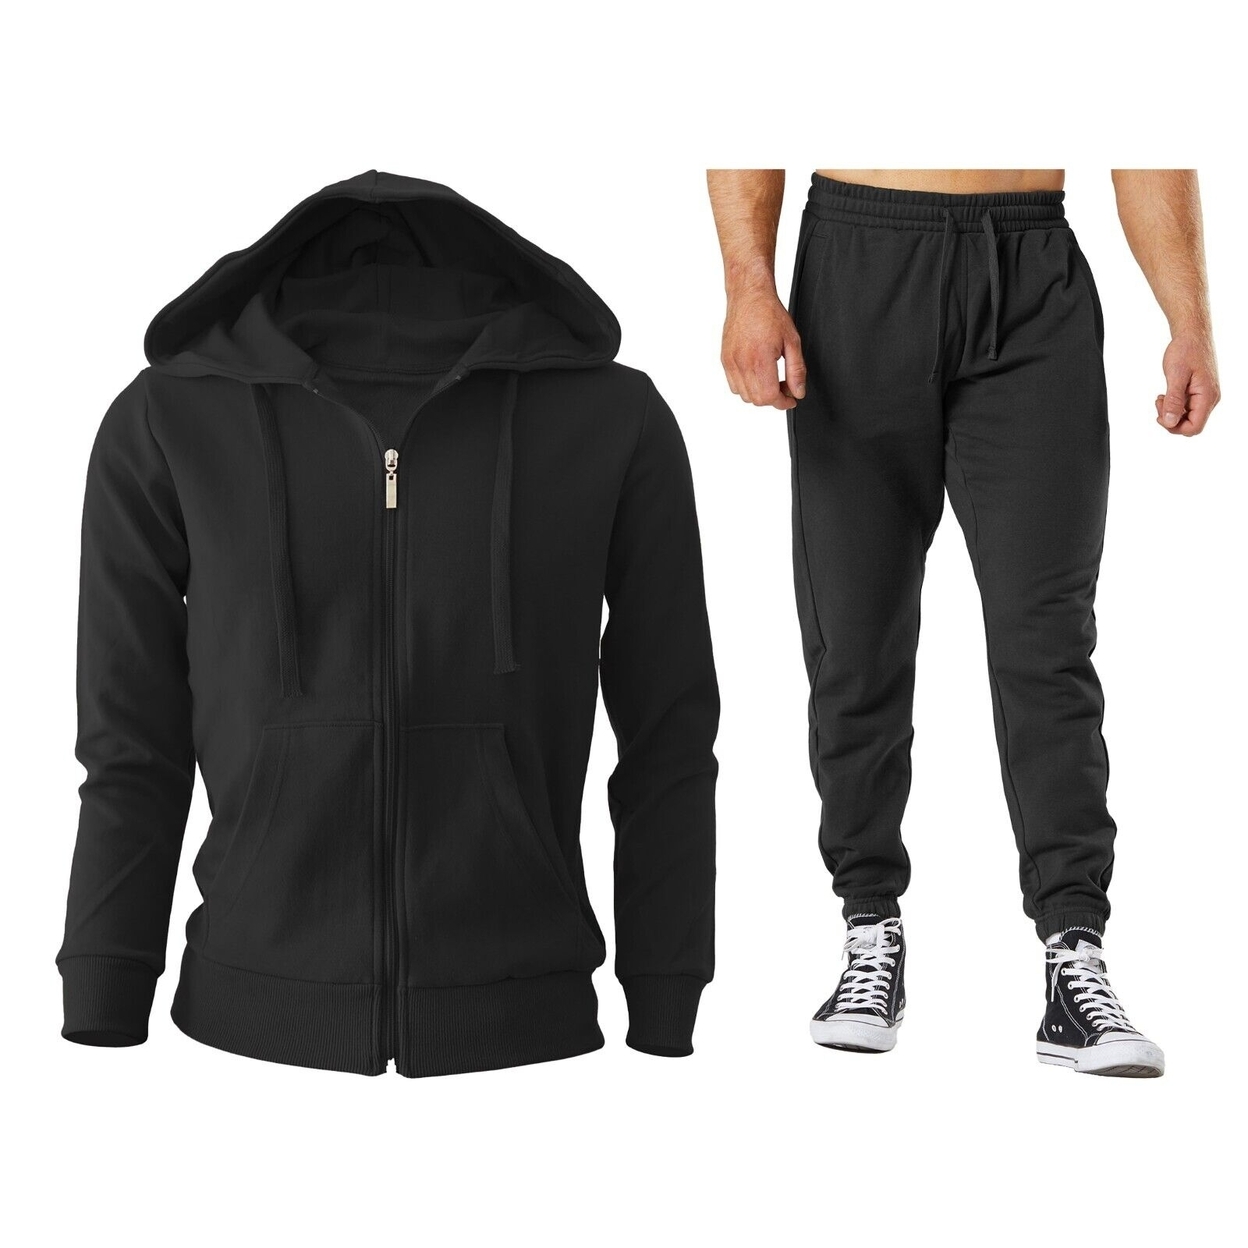 2-Piece: Men's Winter Warm Cozy Athletic Multi-Pockets BIG & TALL Sweatsuit Set - Black, Small